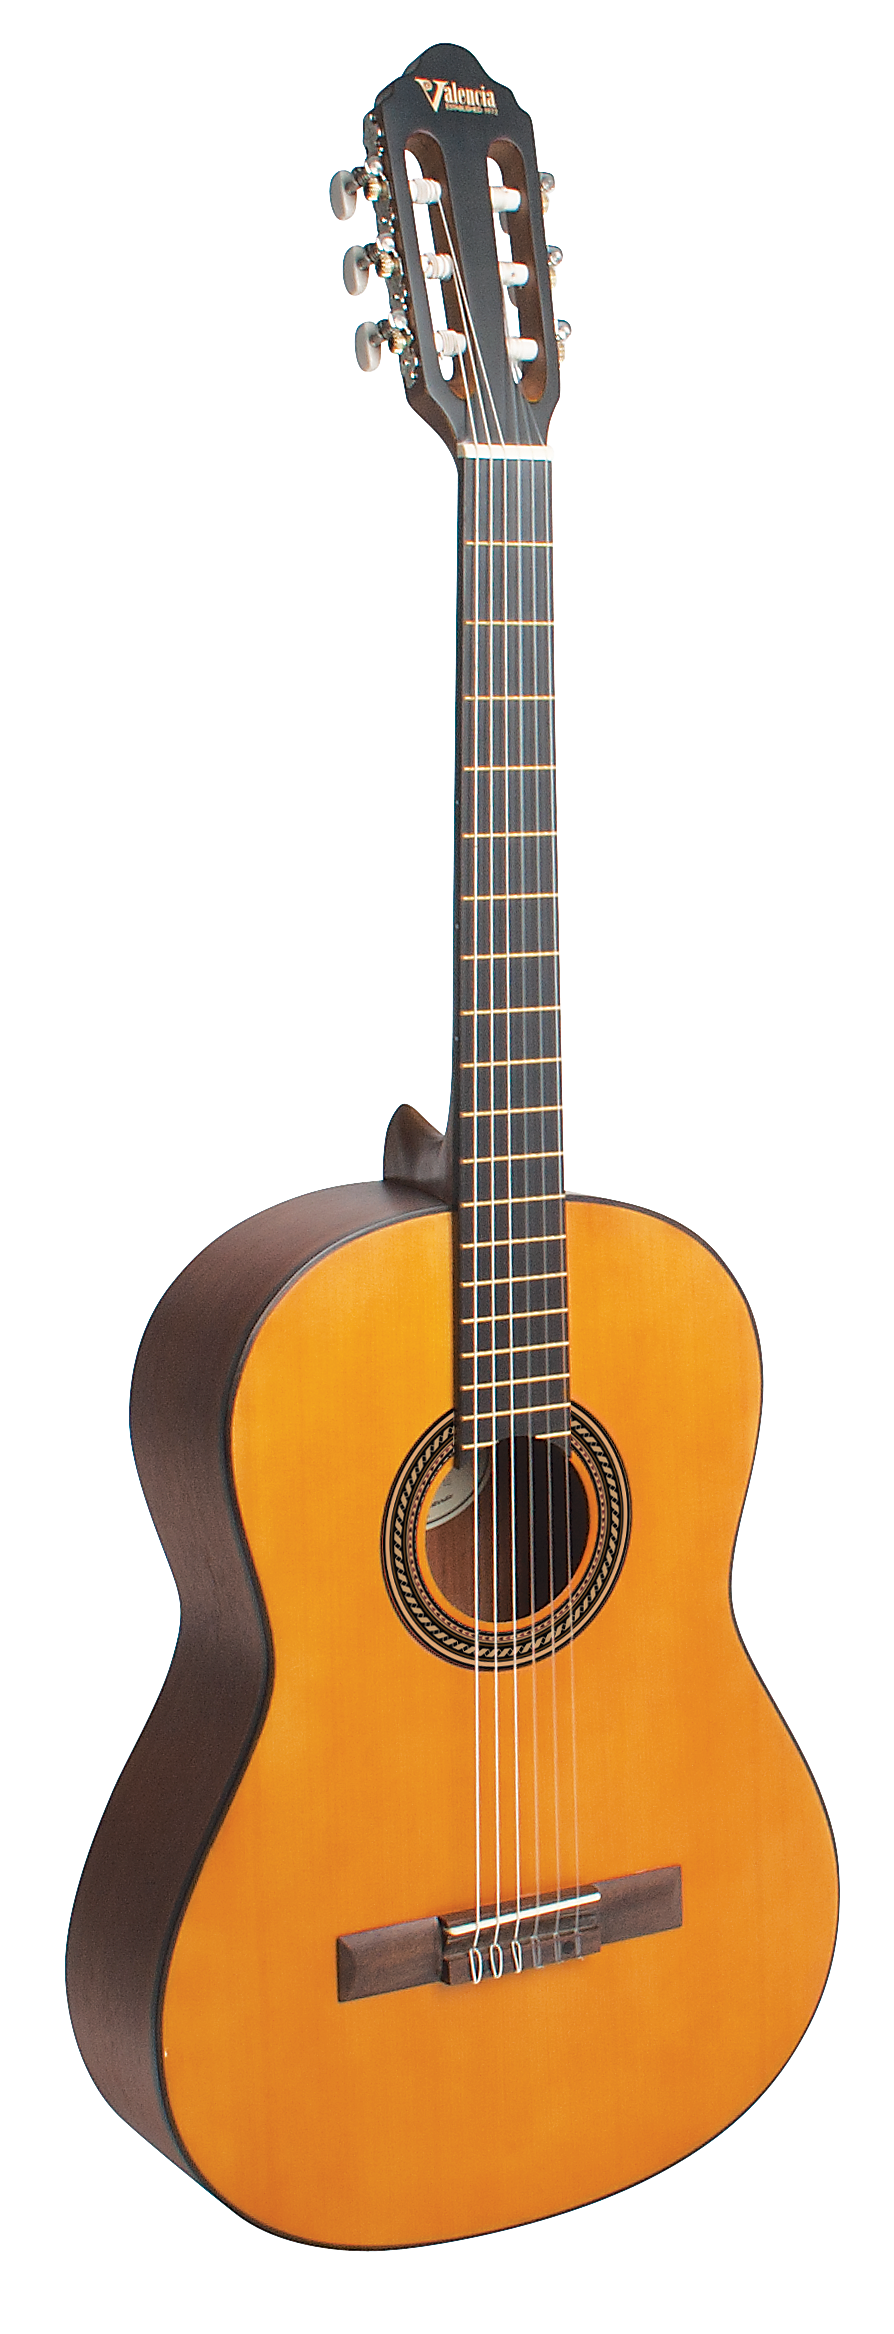 Valencia Classical Guitar 200 Series Full Size